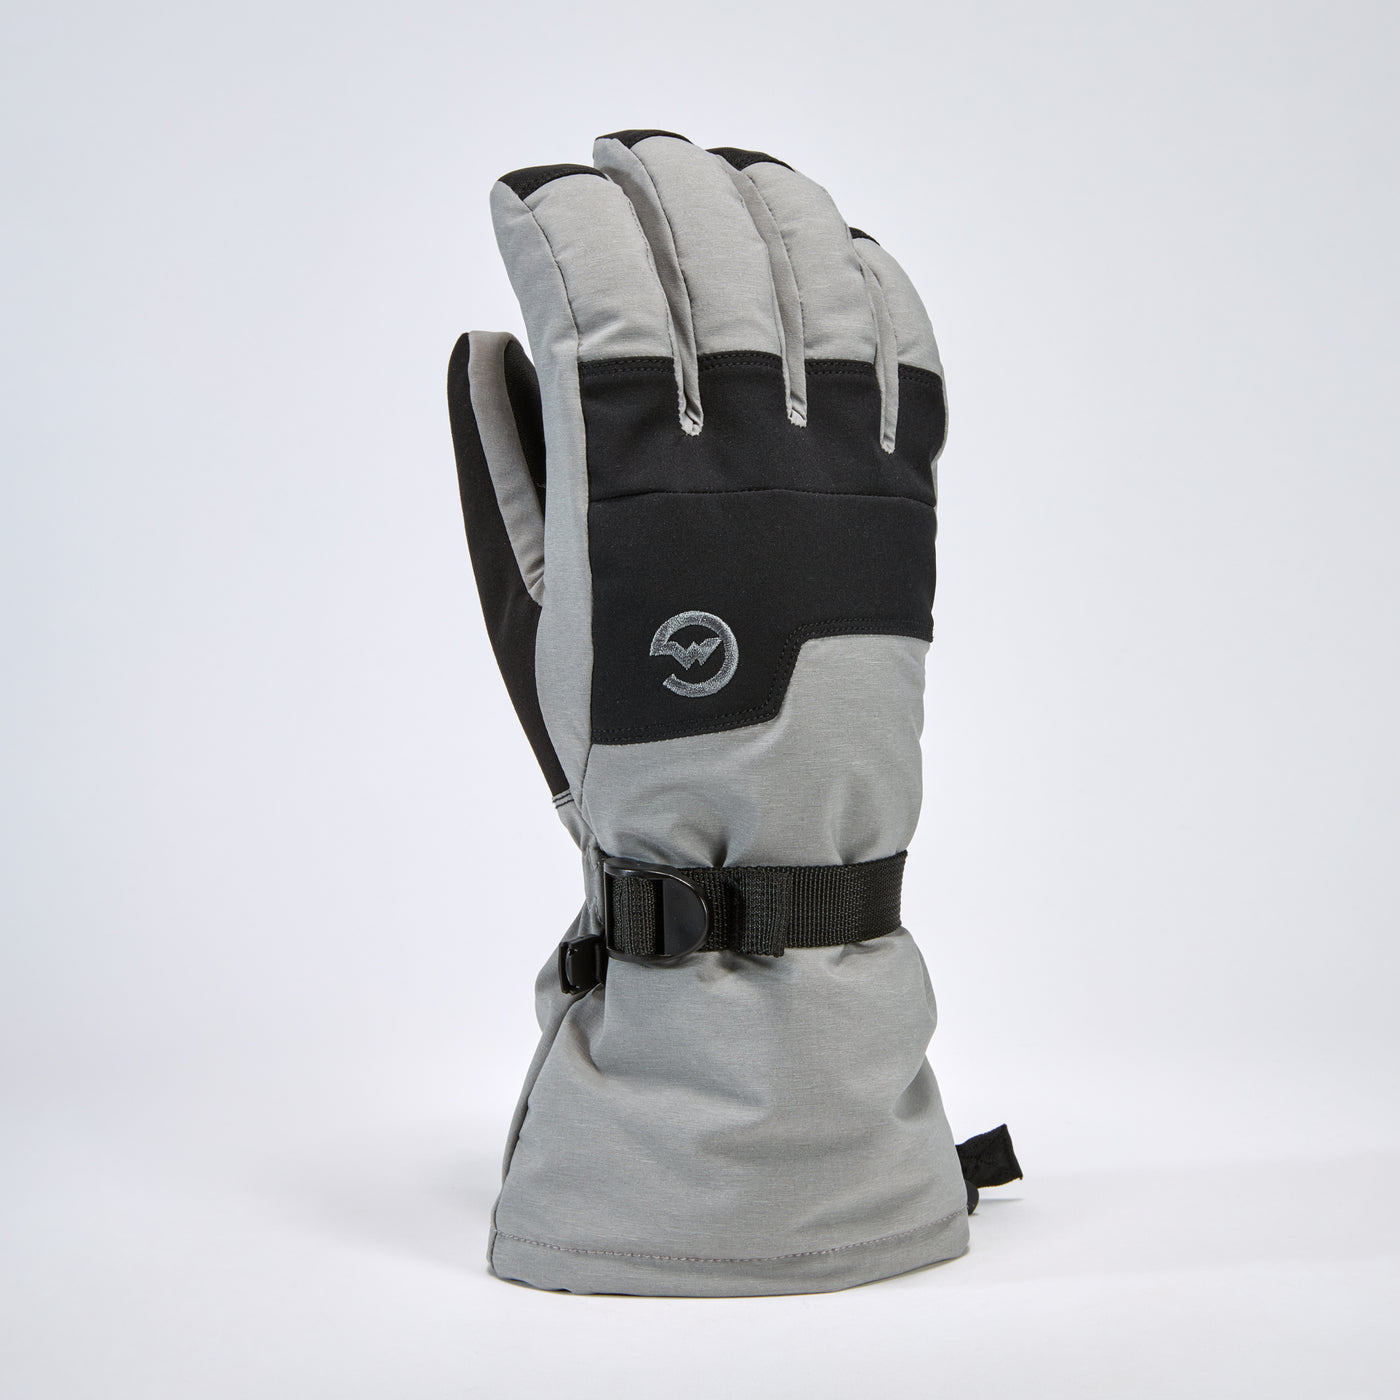 Men's AquaBloc Down Gauntlet Glove